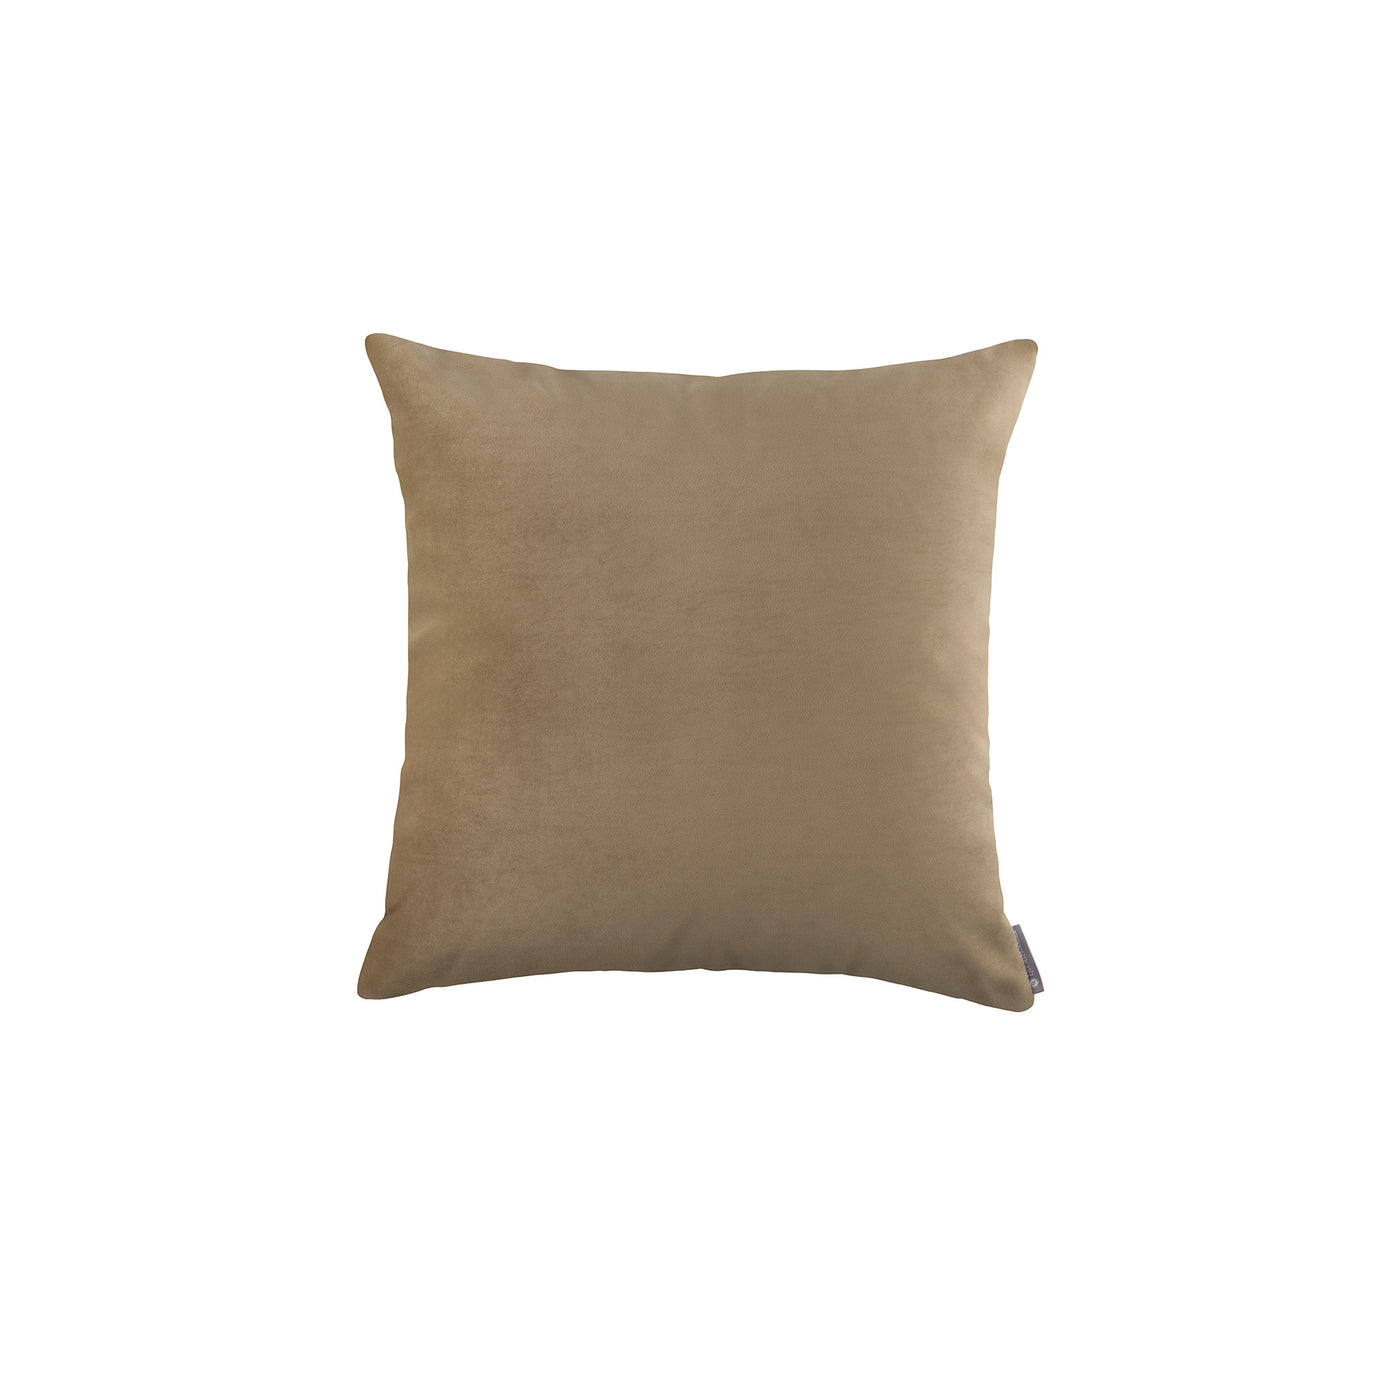 Vivid Beige European Pillow (26x26)